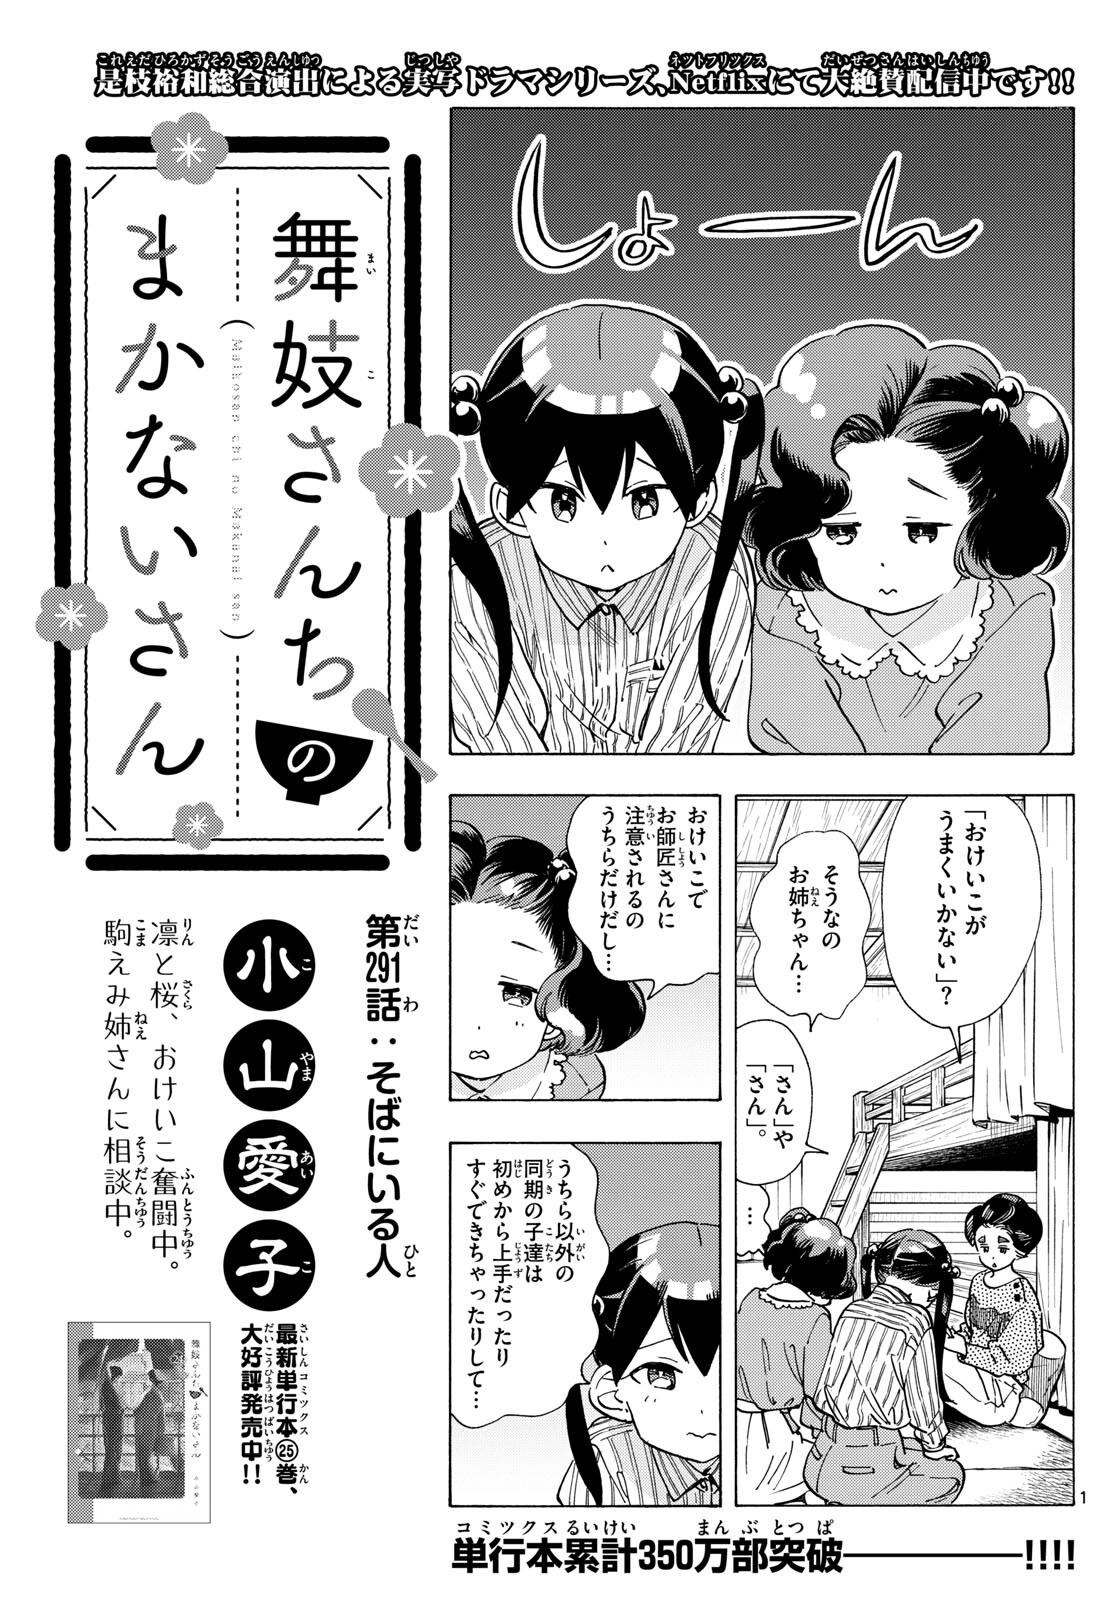 Maiko-san Chi no Makanai-san - Chapter 291 - Page 1